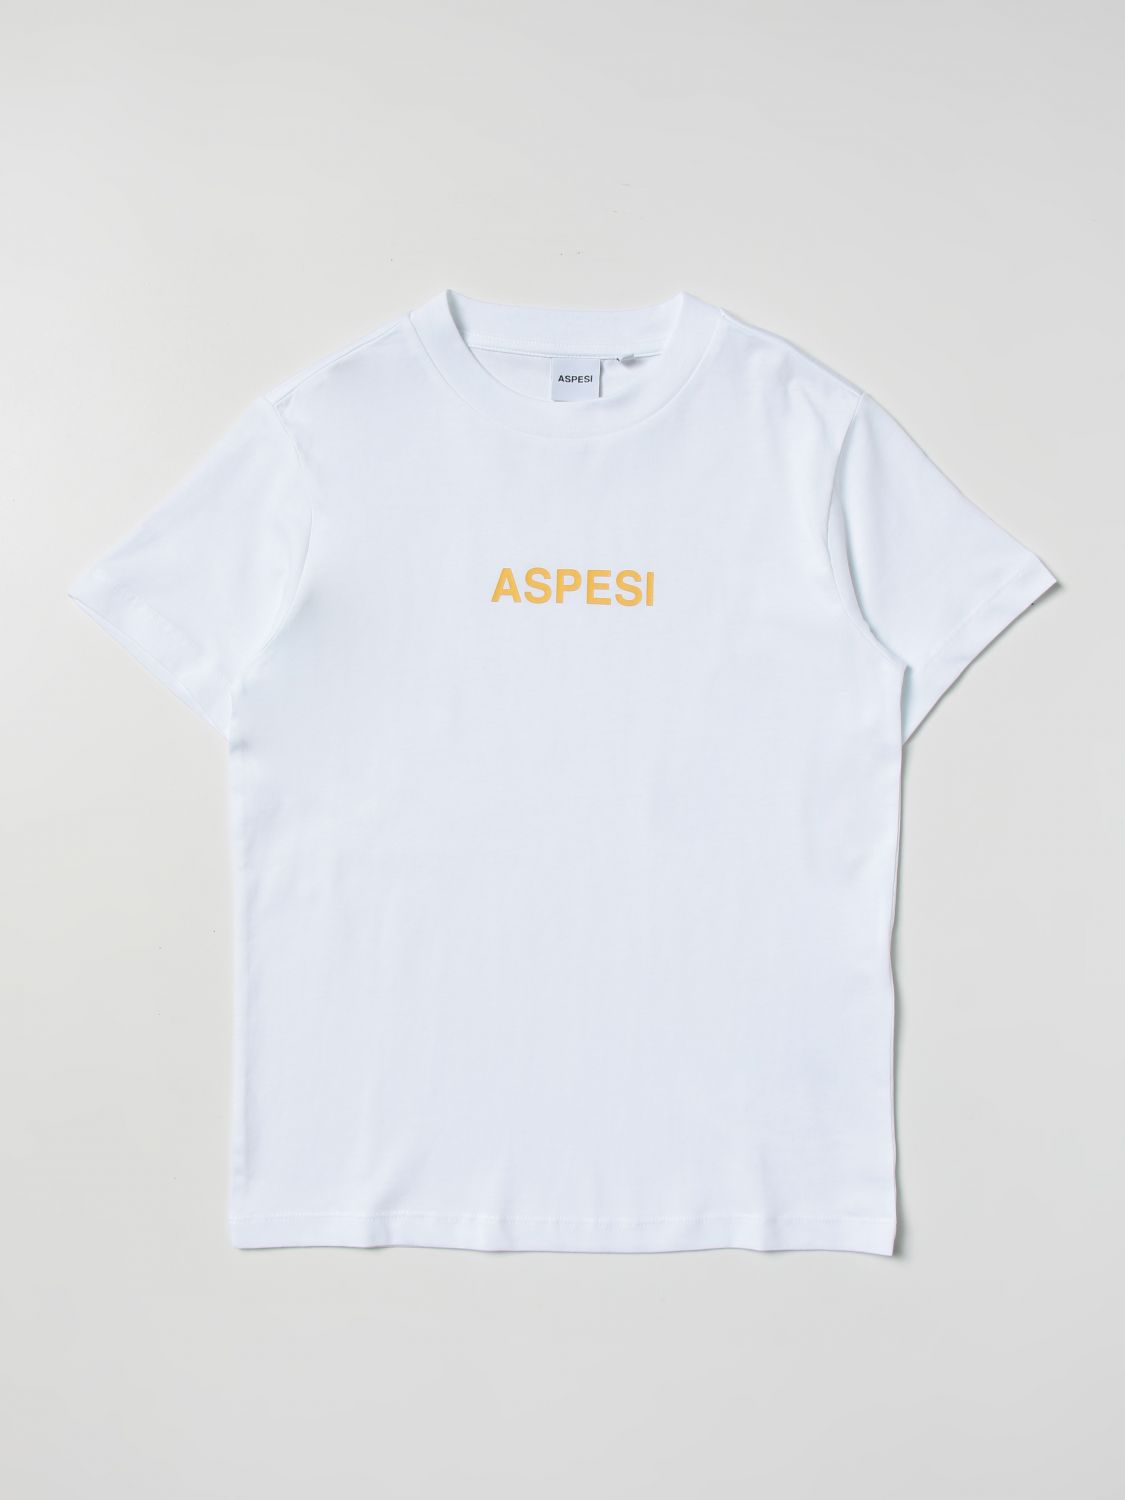 Aspesi T-shirt  Kids Color White